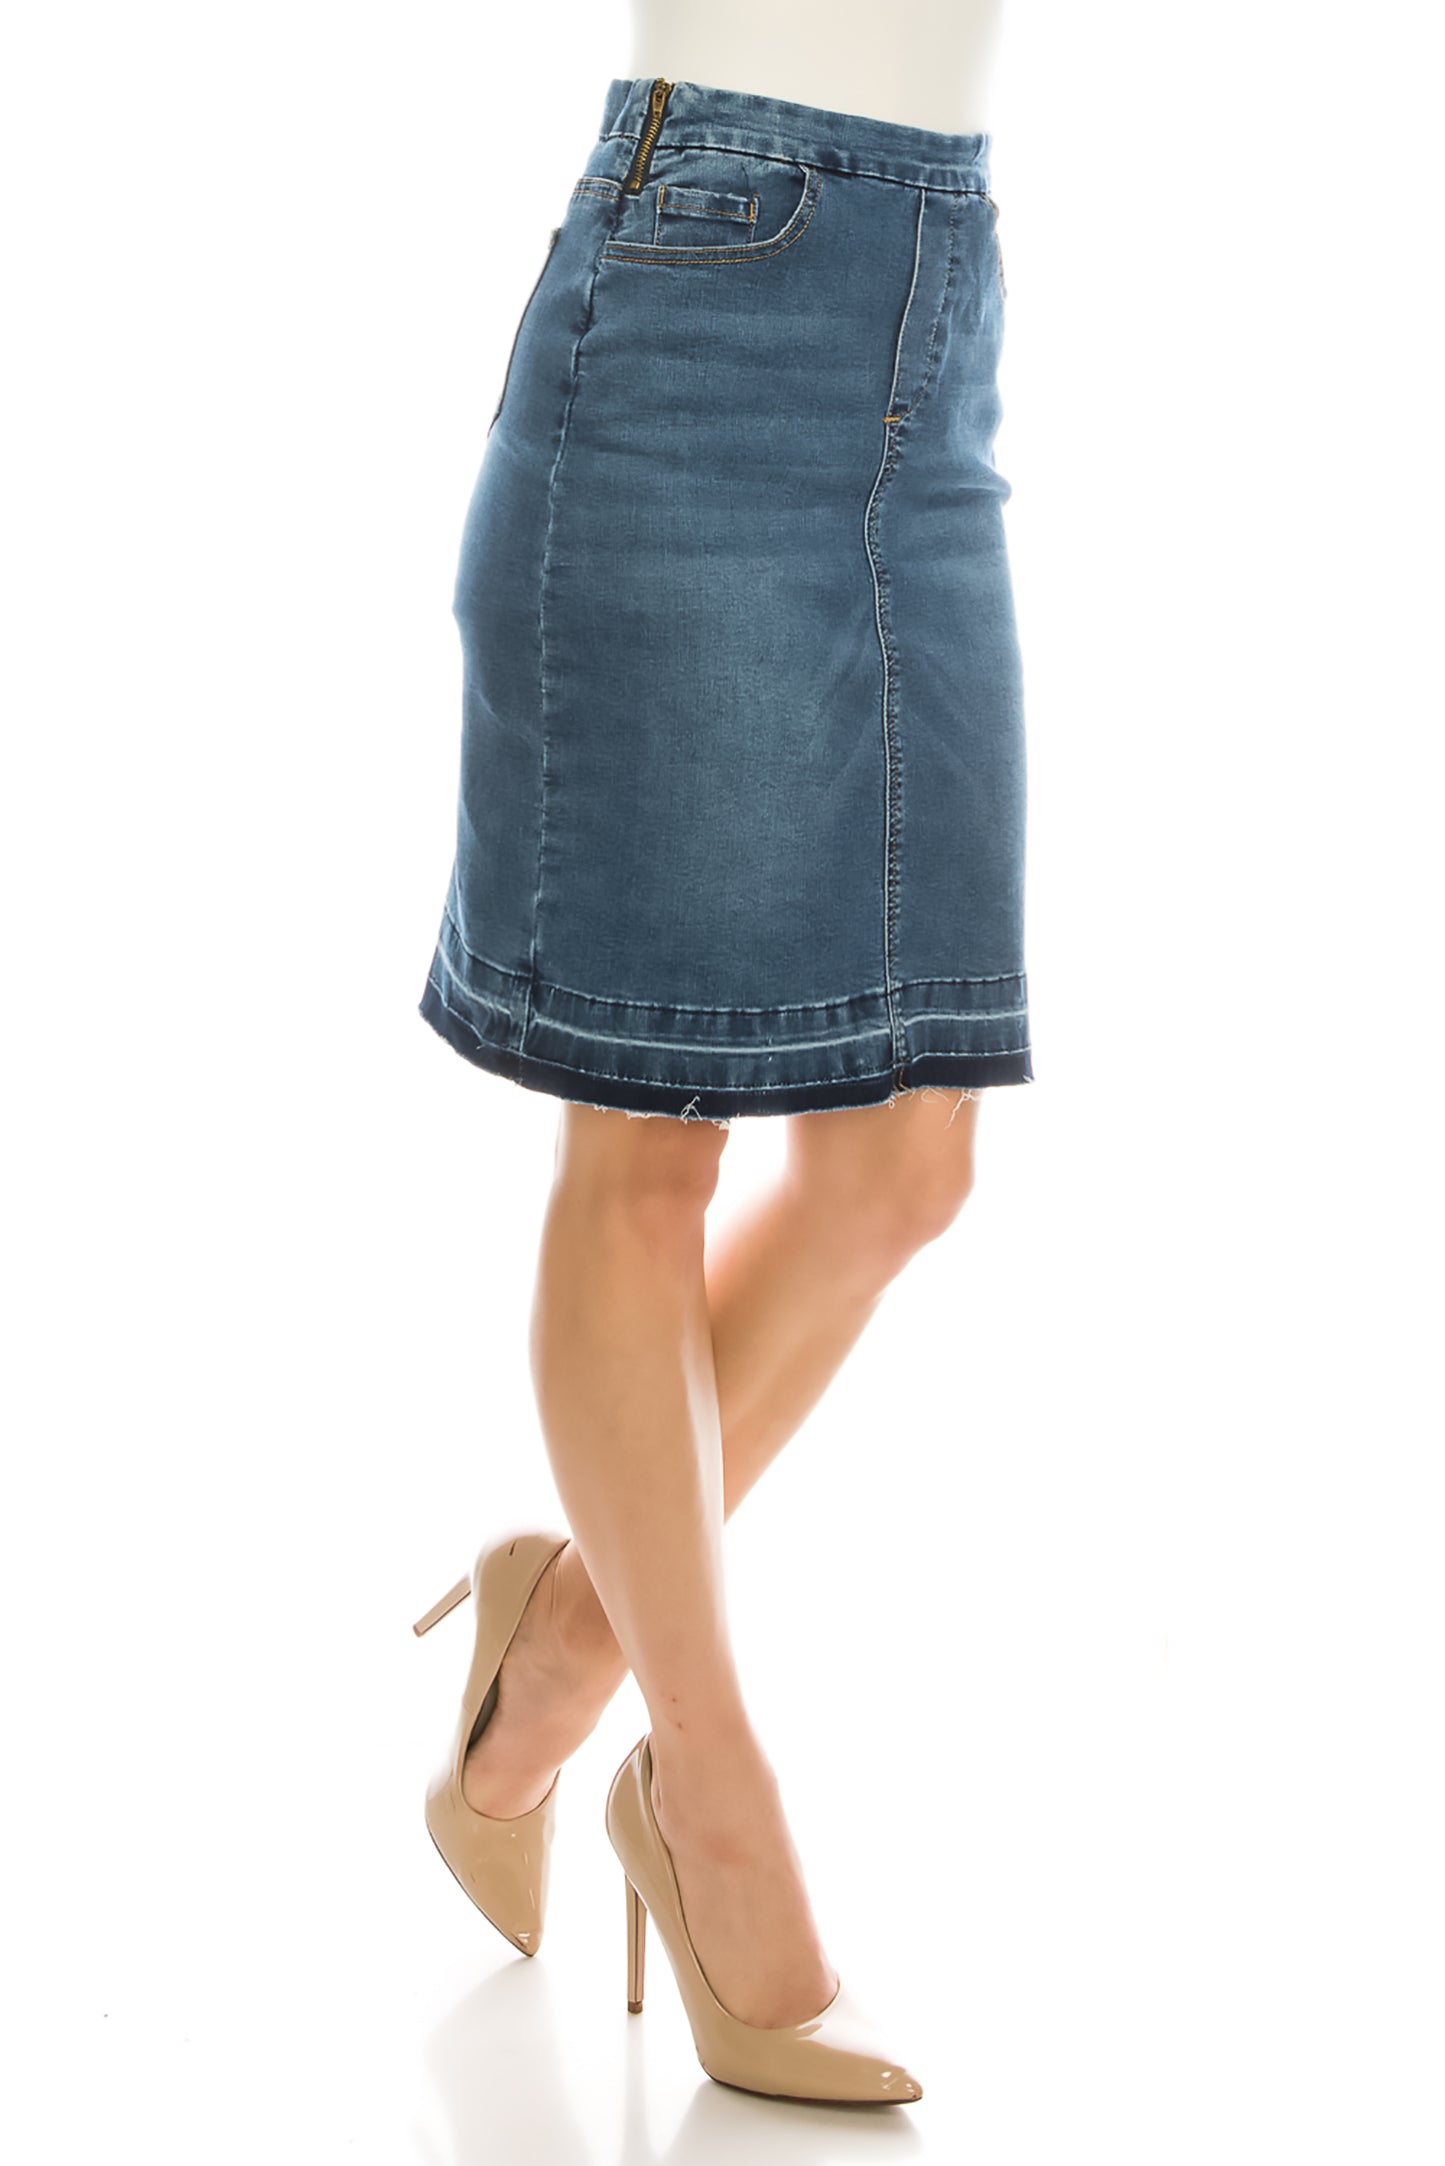 Vera Basic Knee Length Jean Pencil Skirt With Raw Hem - CHI-CHI NYC